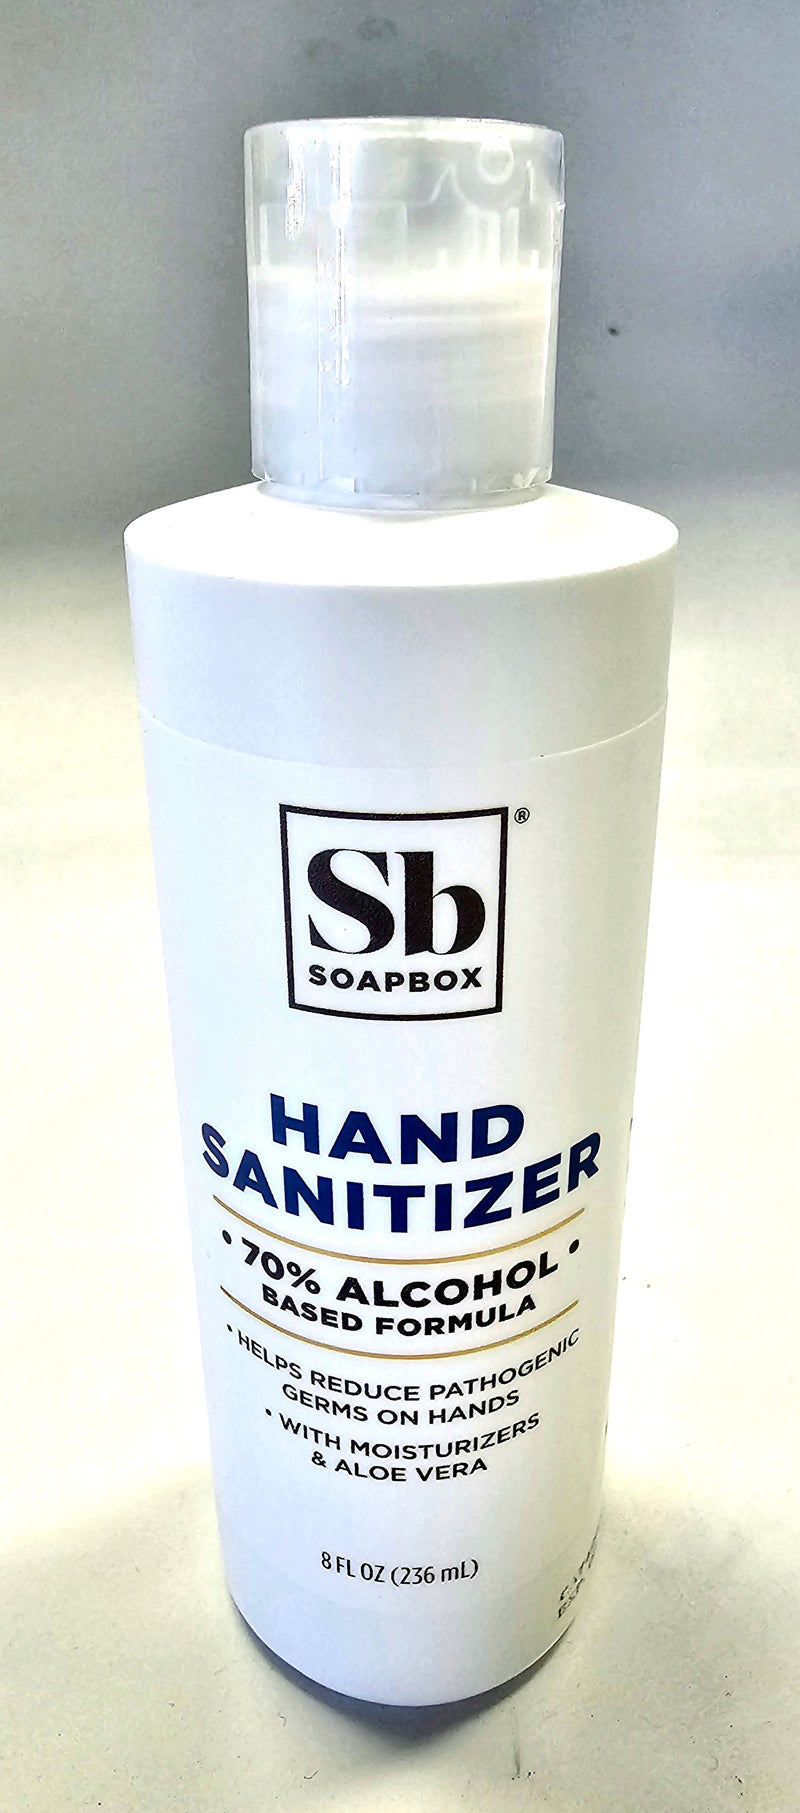 Hand Sanitizer 8 FL OZ (236 mL) - 2 pack